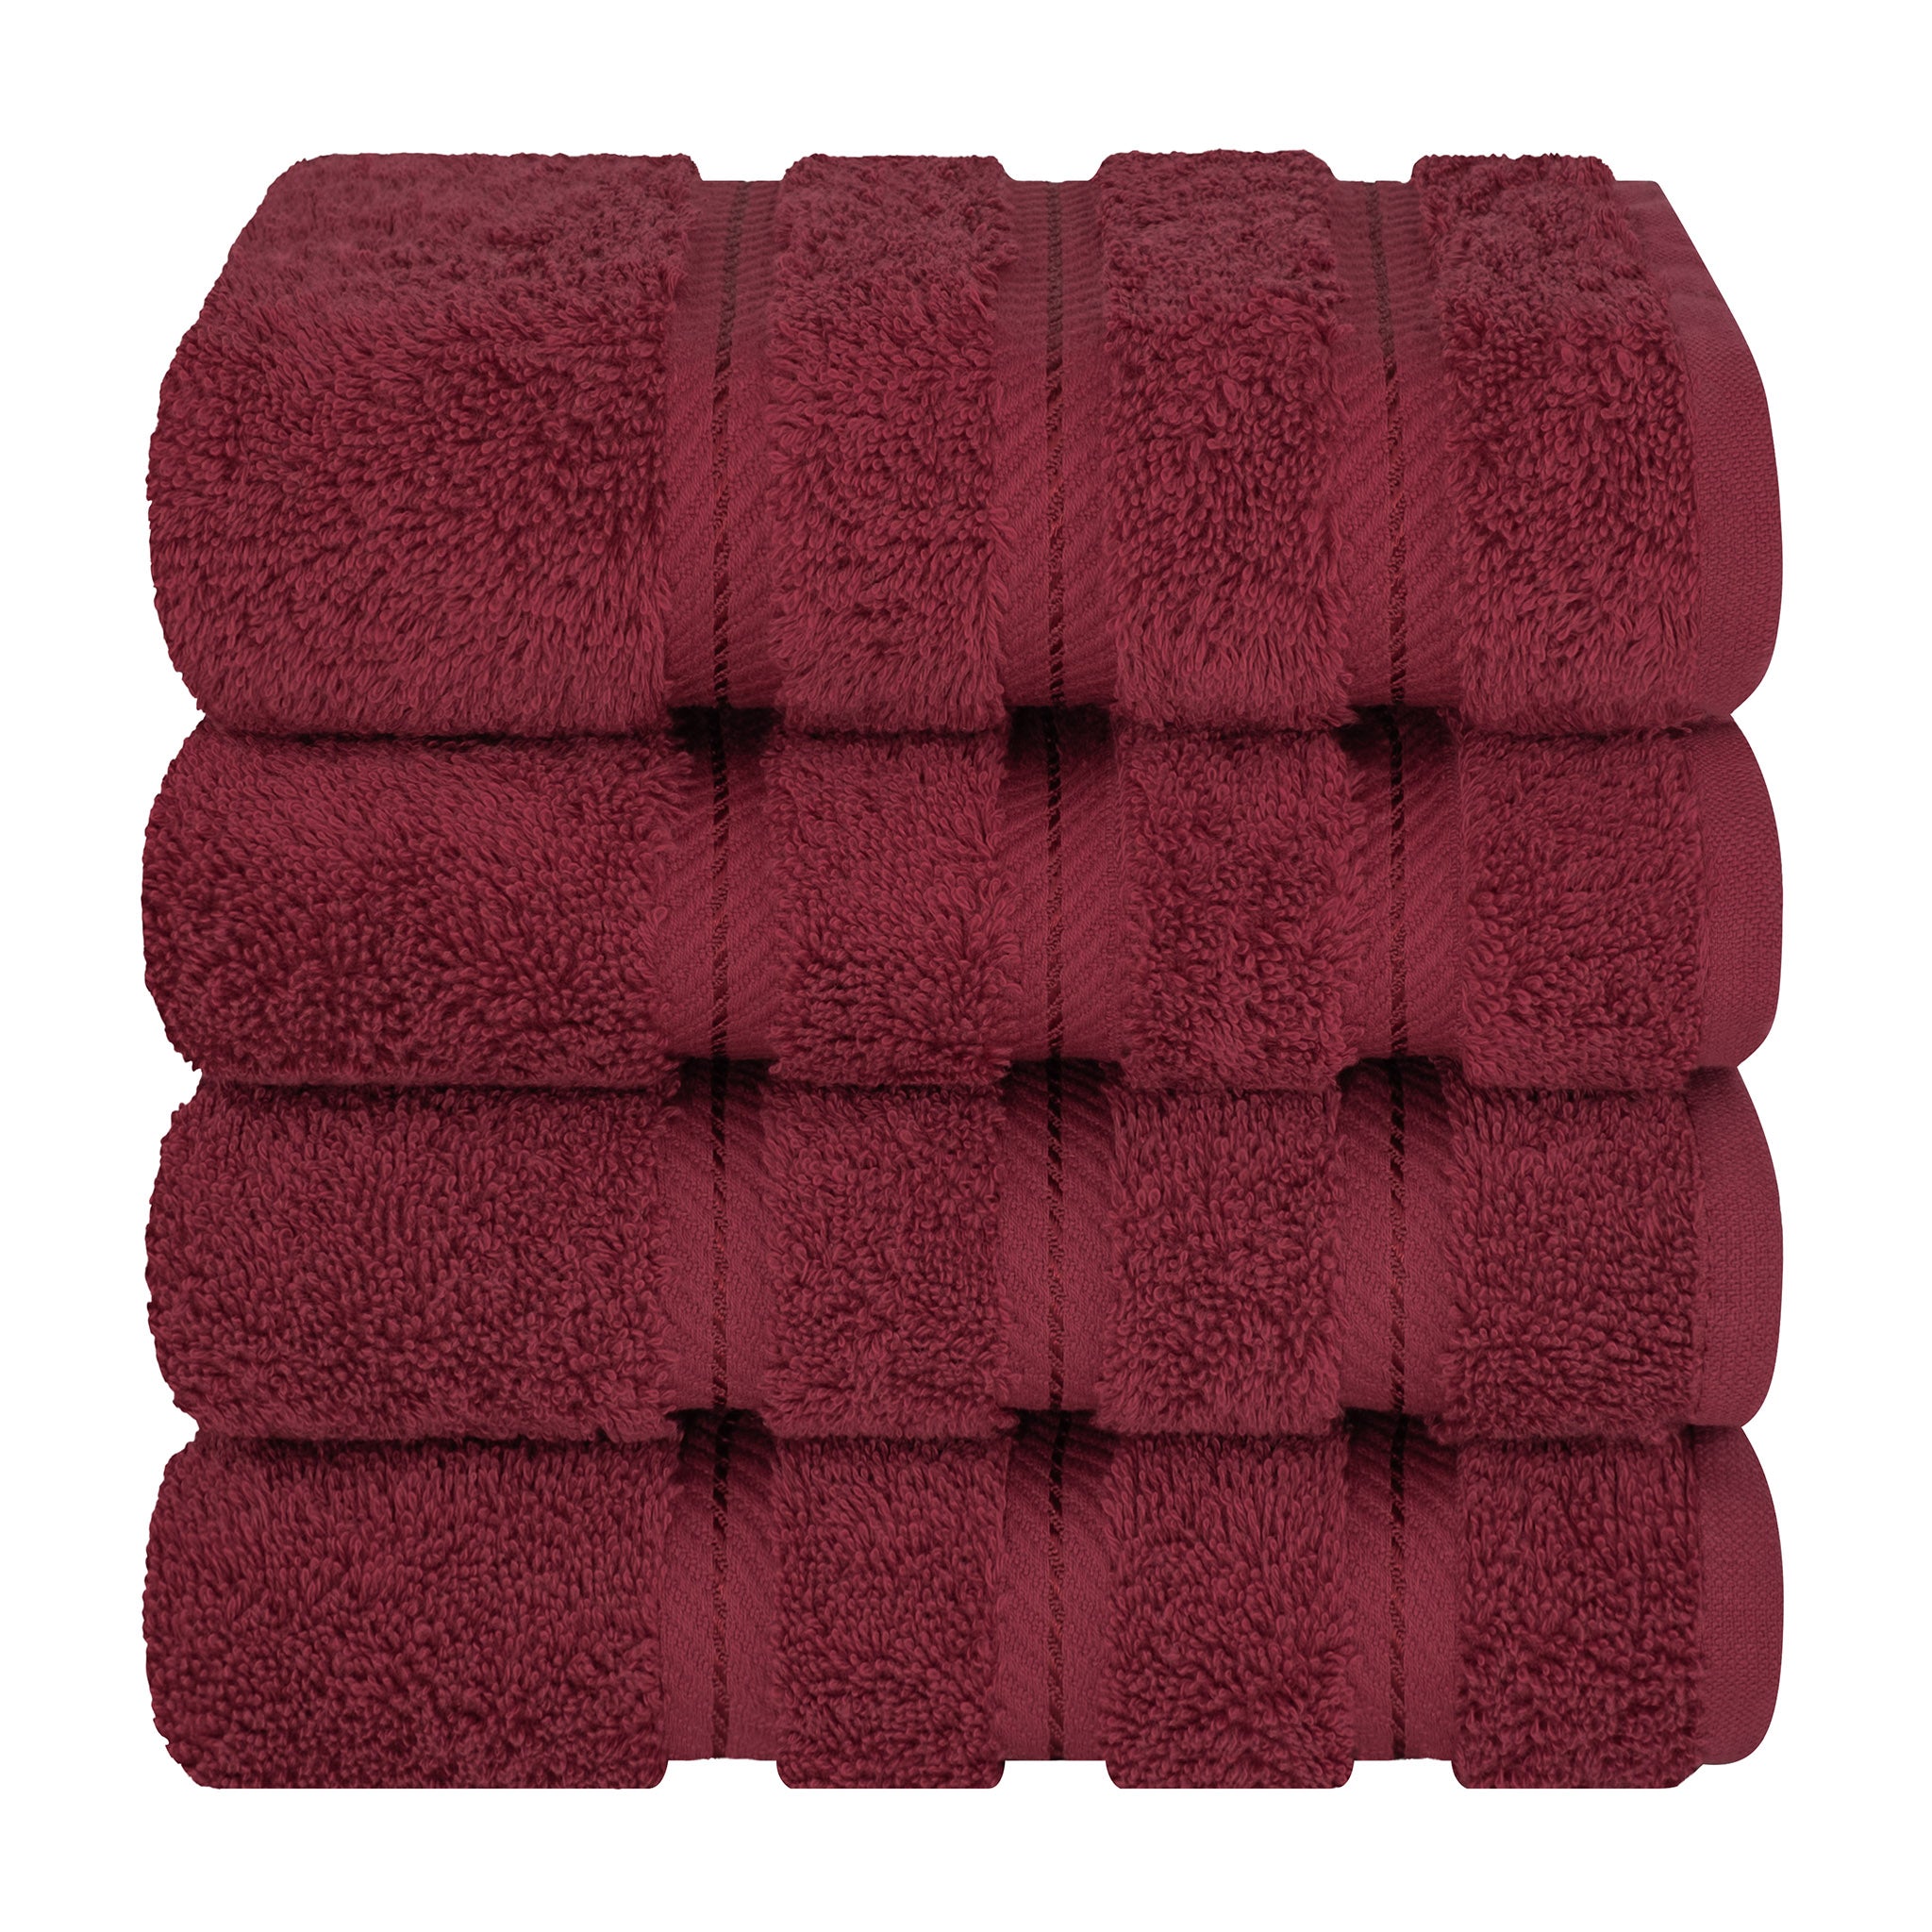  American Soft Linen 100% Turkish Cotton 4 Pack Hand Towel Set  bordeaux-red-7